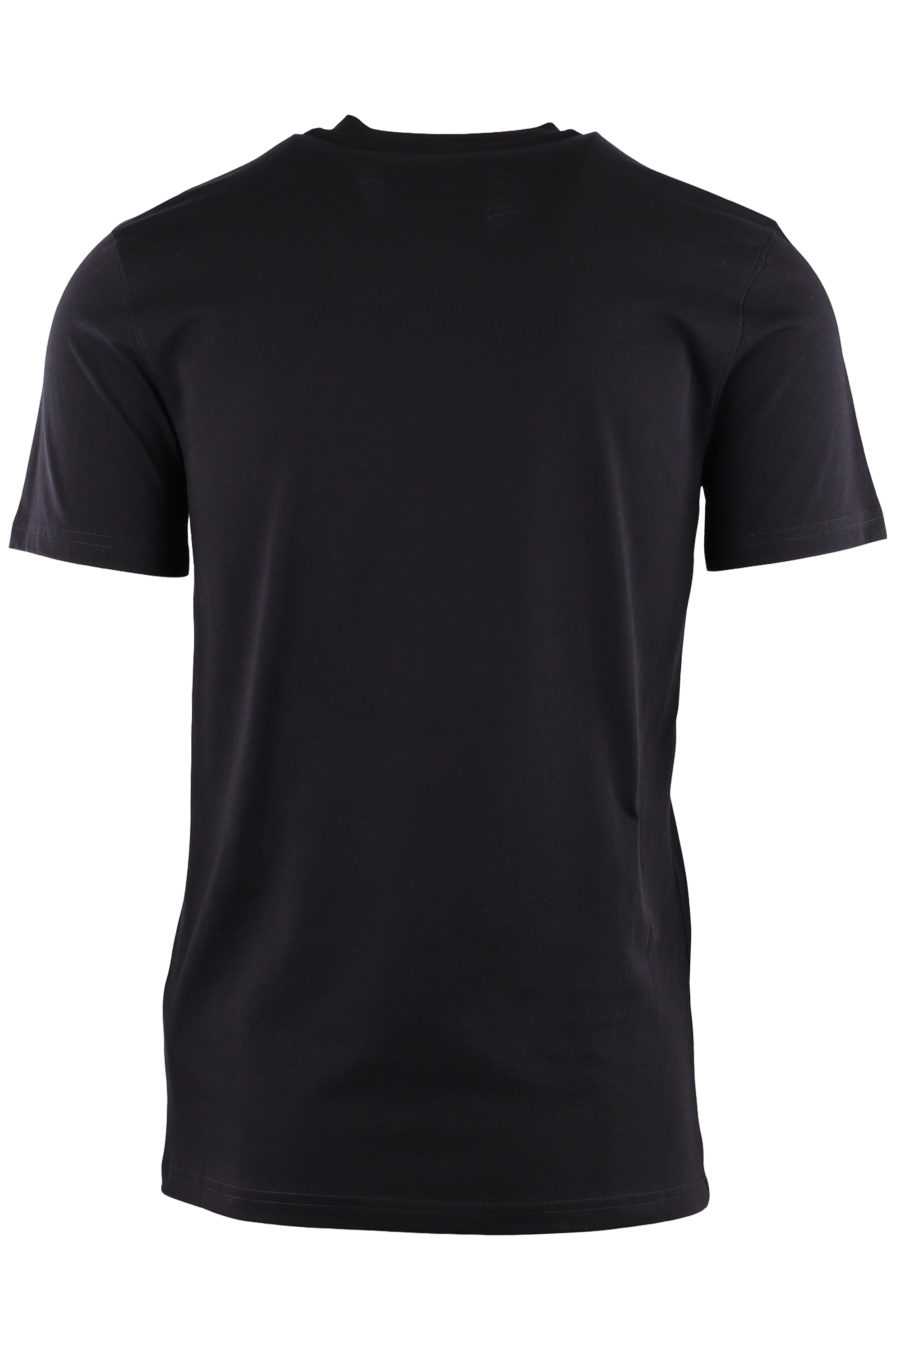 Black T-shirt with gold rubber logo - 9935b8649602e7e9d2a90edab5575755805d385067